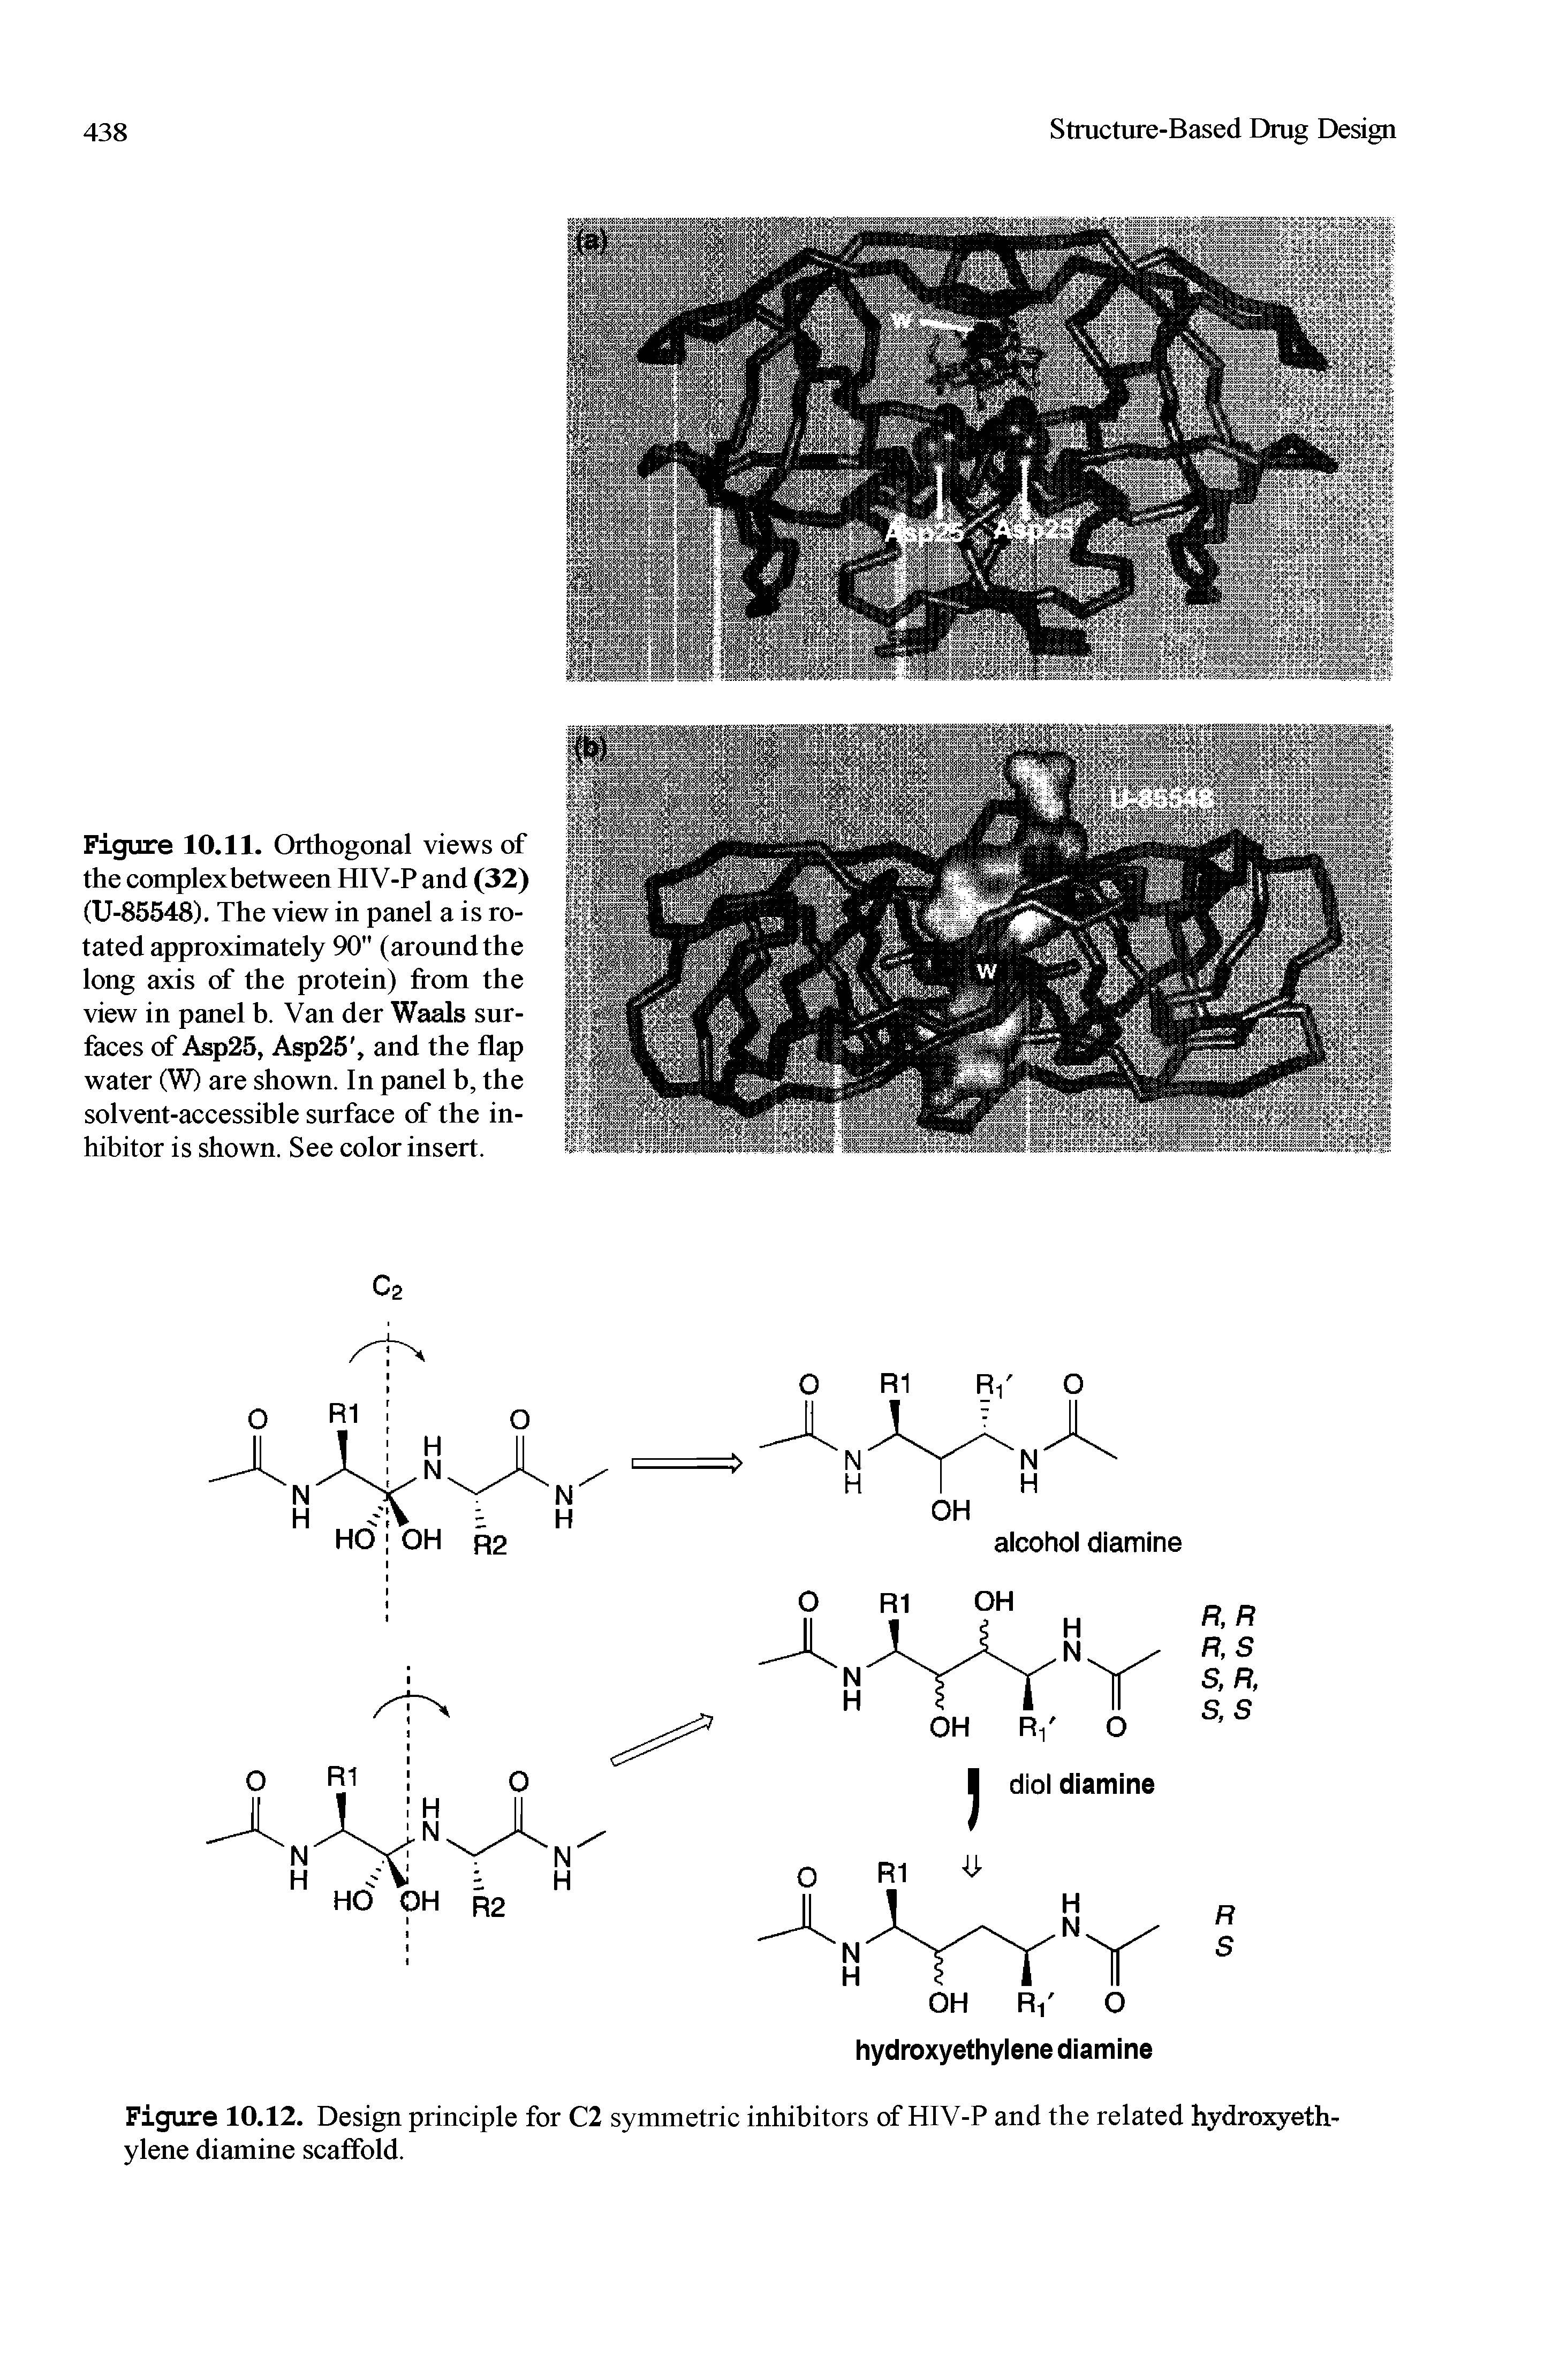 Figure 10.12. Design principle for C2 symmetric inhibitors of HIV-P and the related hydroxyethylene diamine scaffold.